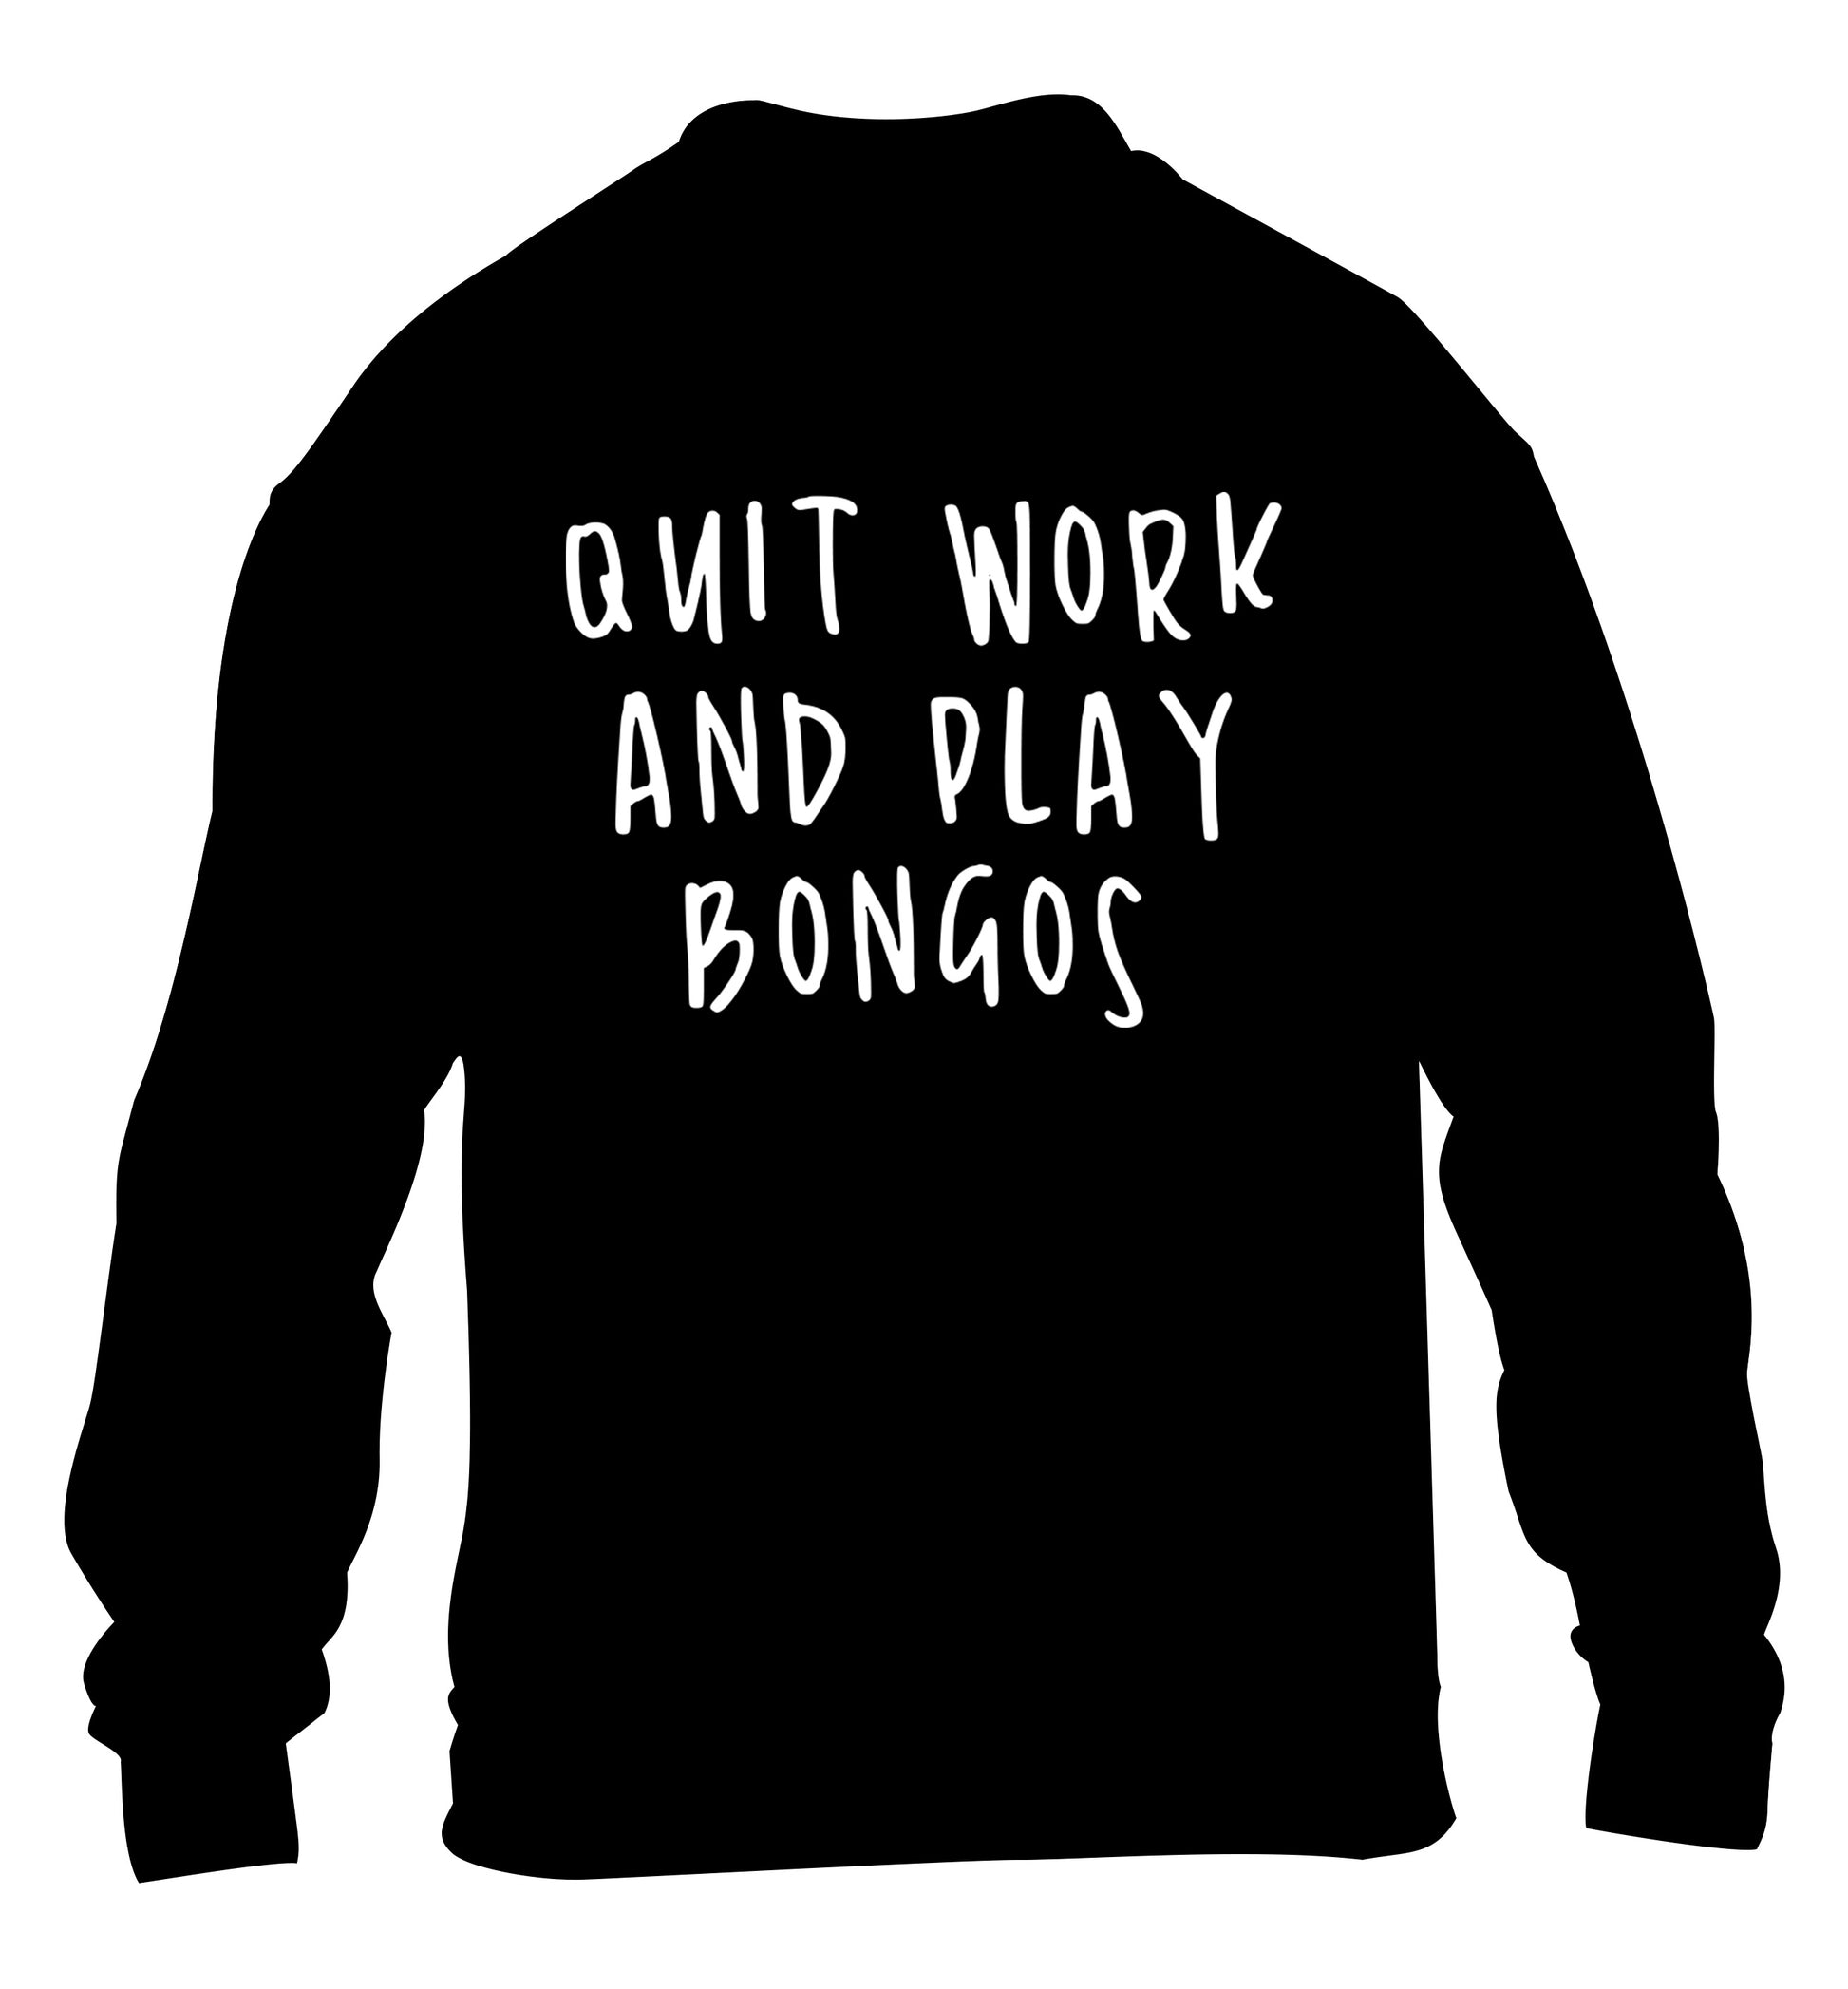 Quit work and play bongos children's black sweater 12-14 Years